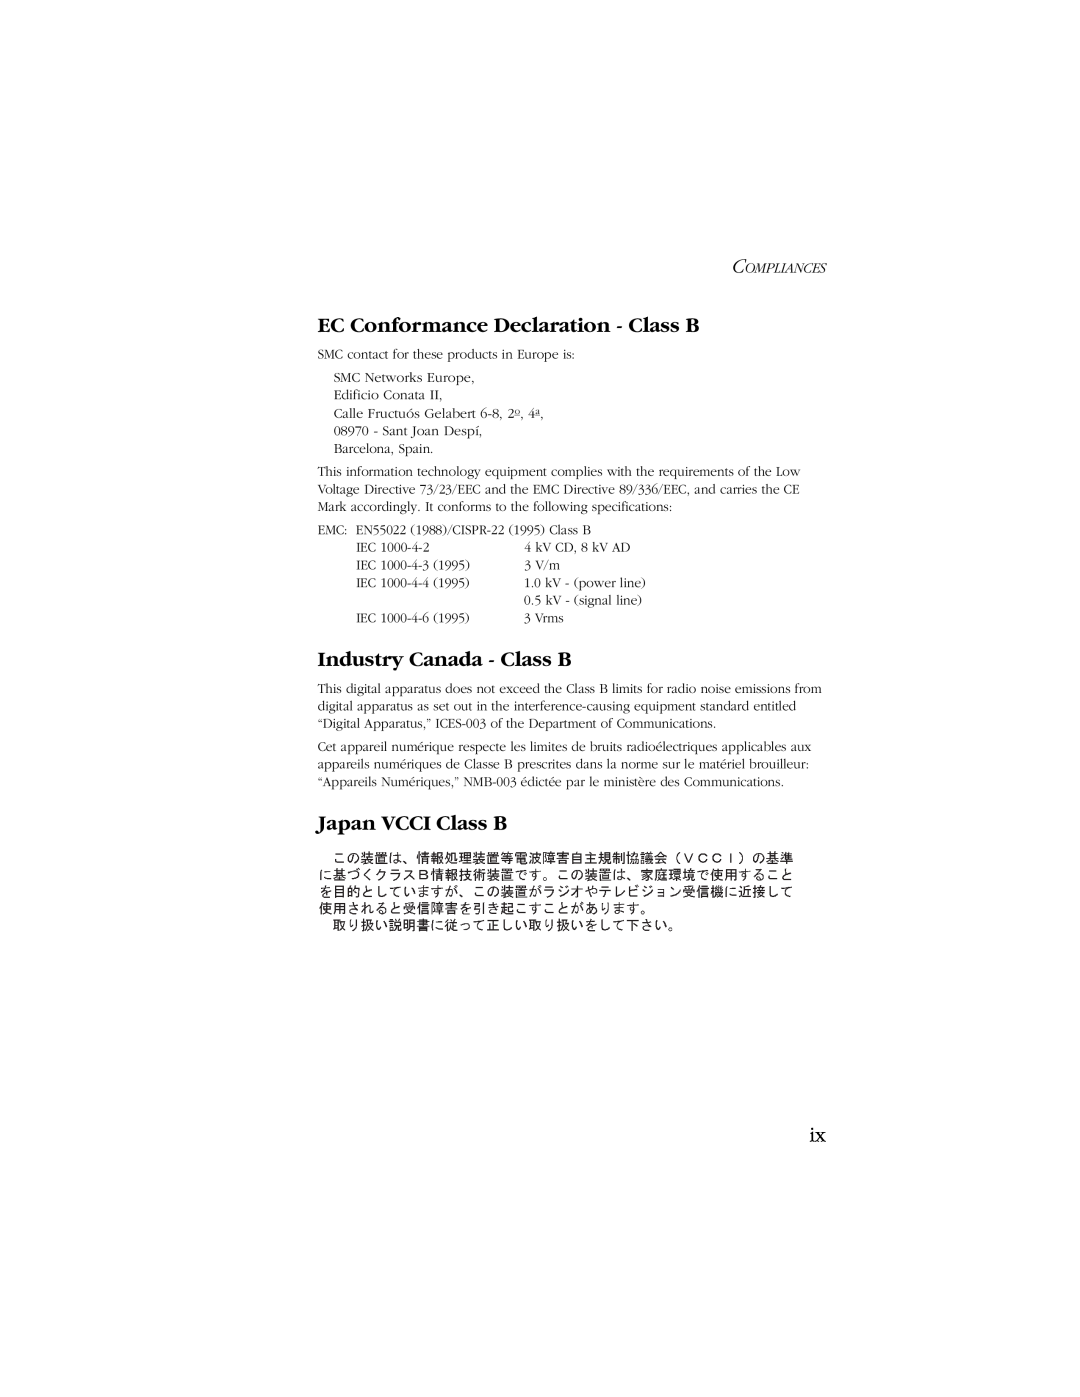 SMC Networks SMC7003-USB EC Conformance Declaration - Class B, Industry Canada - Class B, Japan VCCI Class B, Compliances 